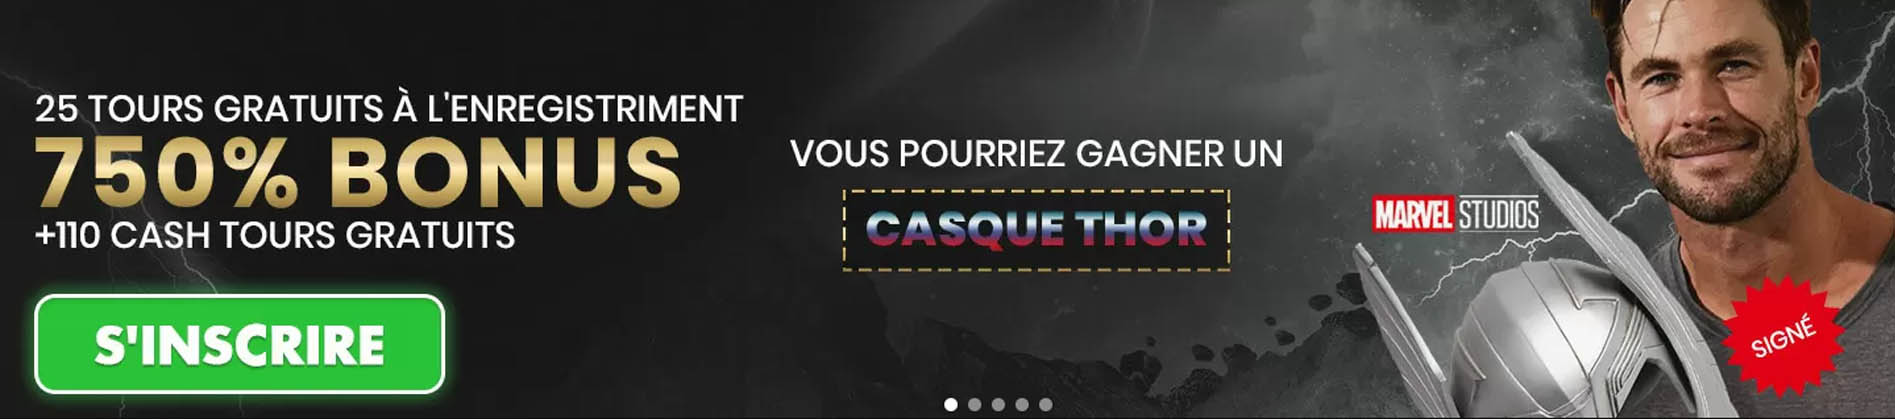 logo Vive Mon Casino